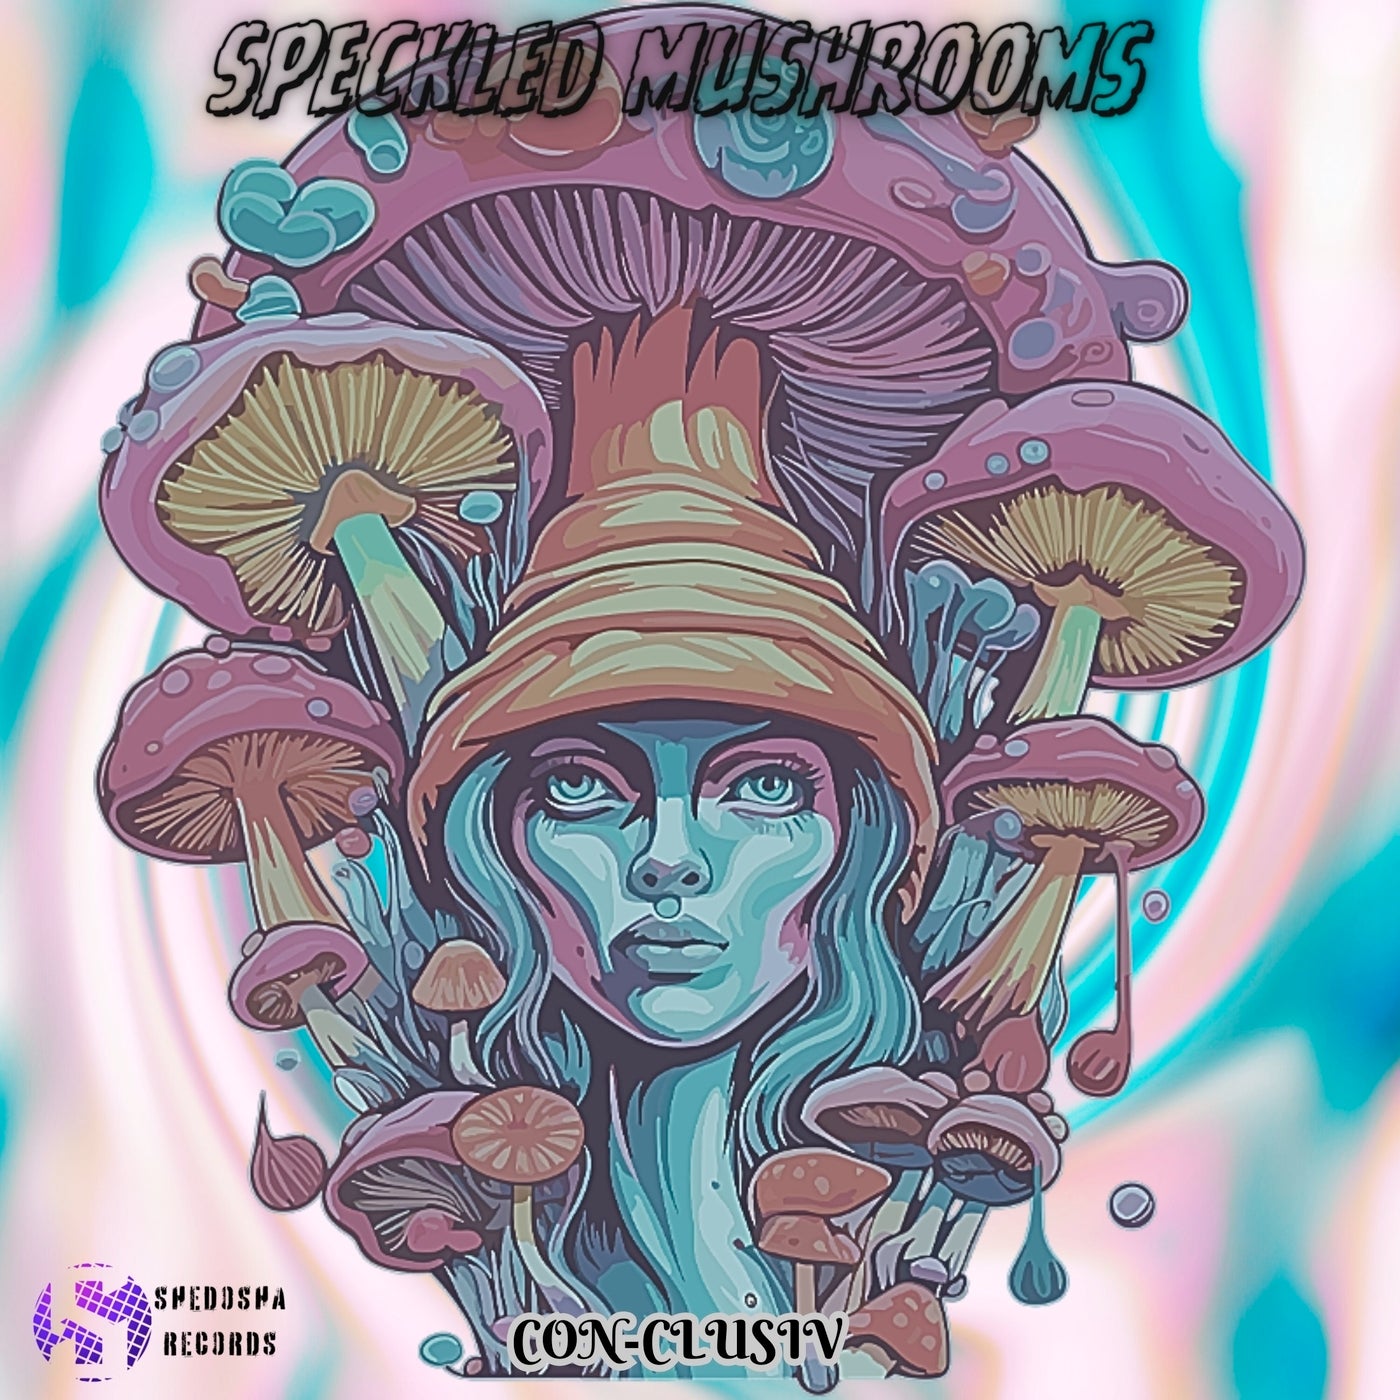 Speckled Mushrooms